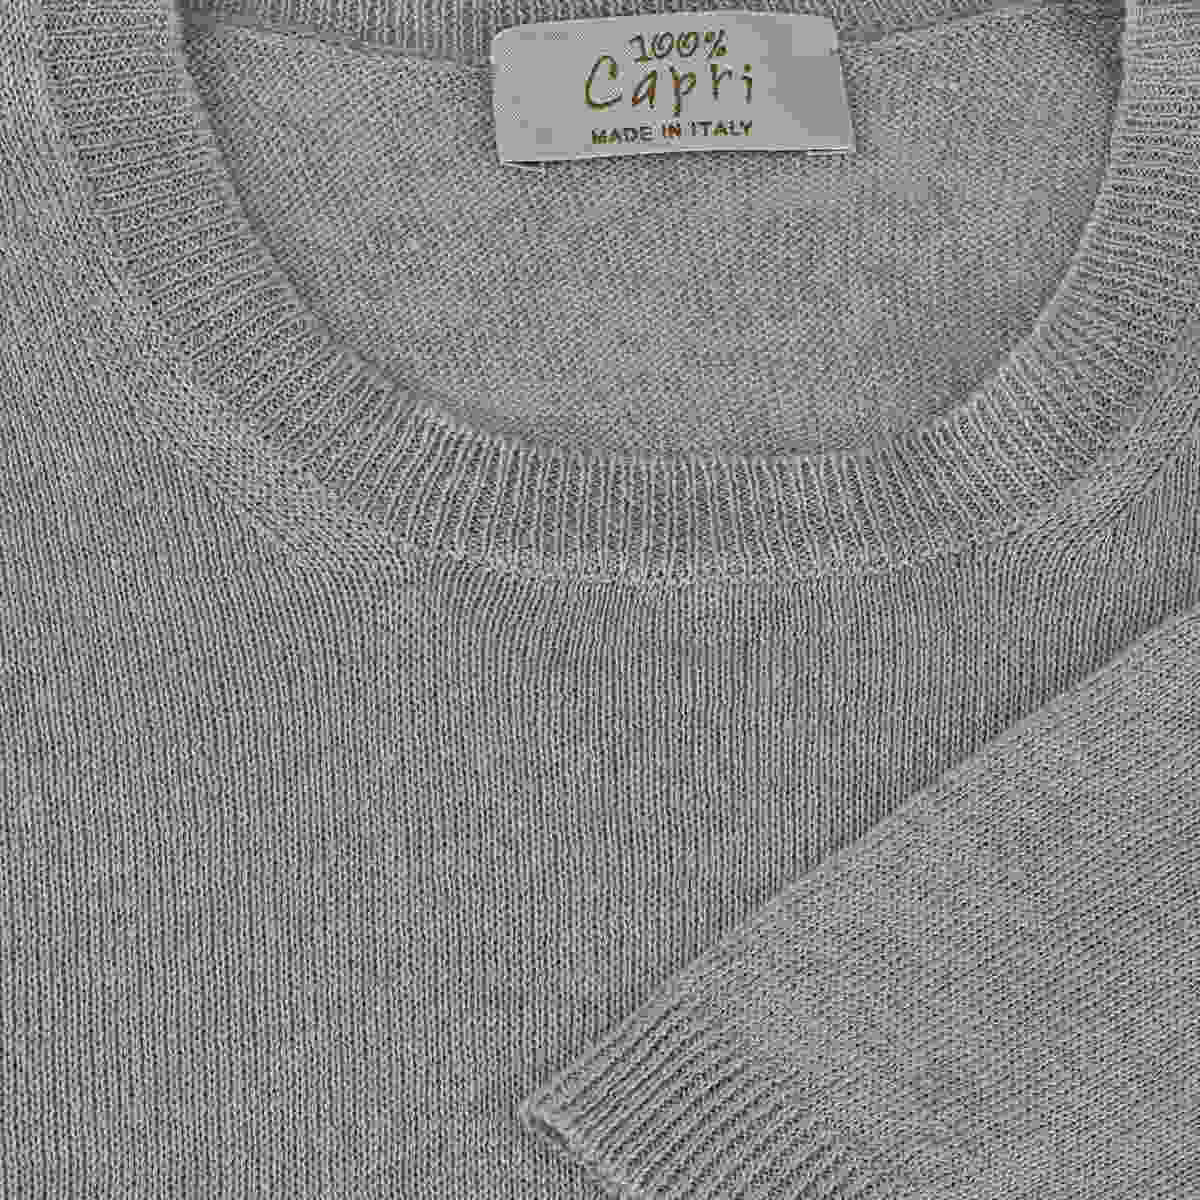 Linen tshirt for man light grey color details view 100% Capri